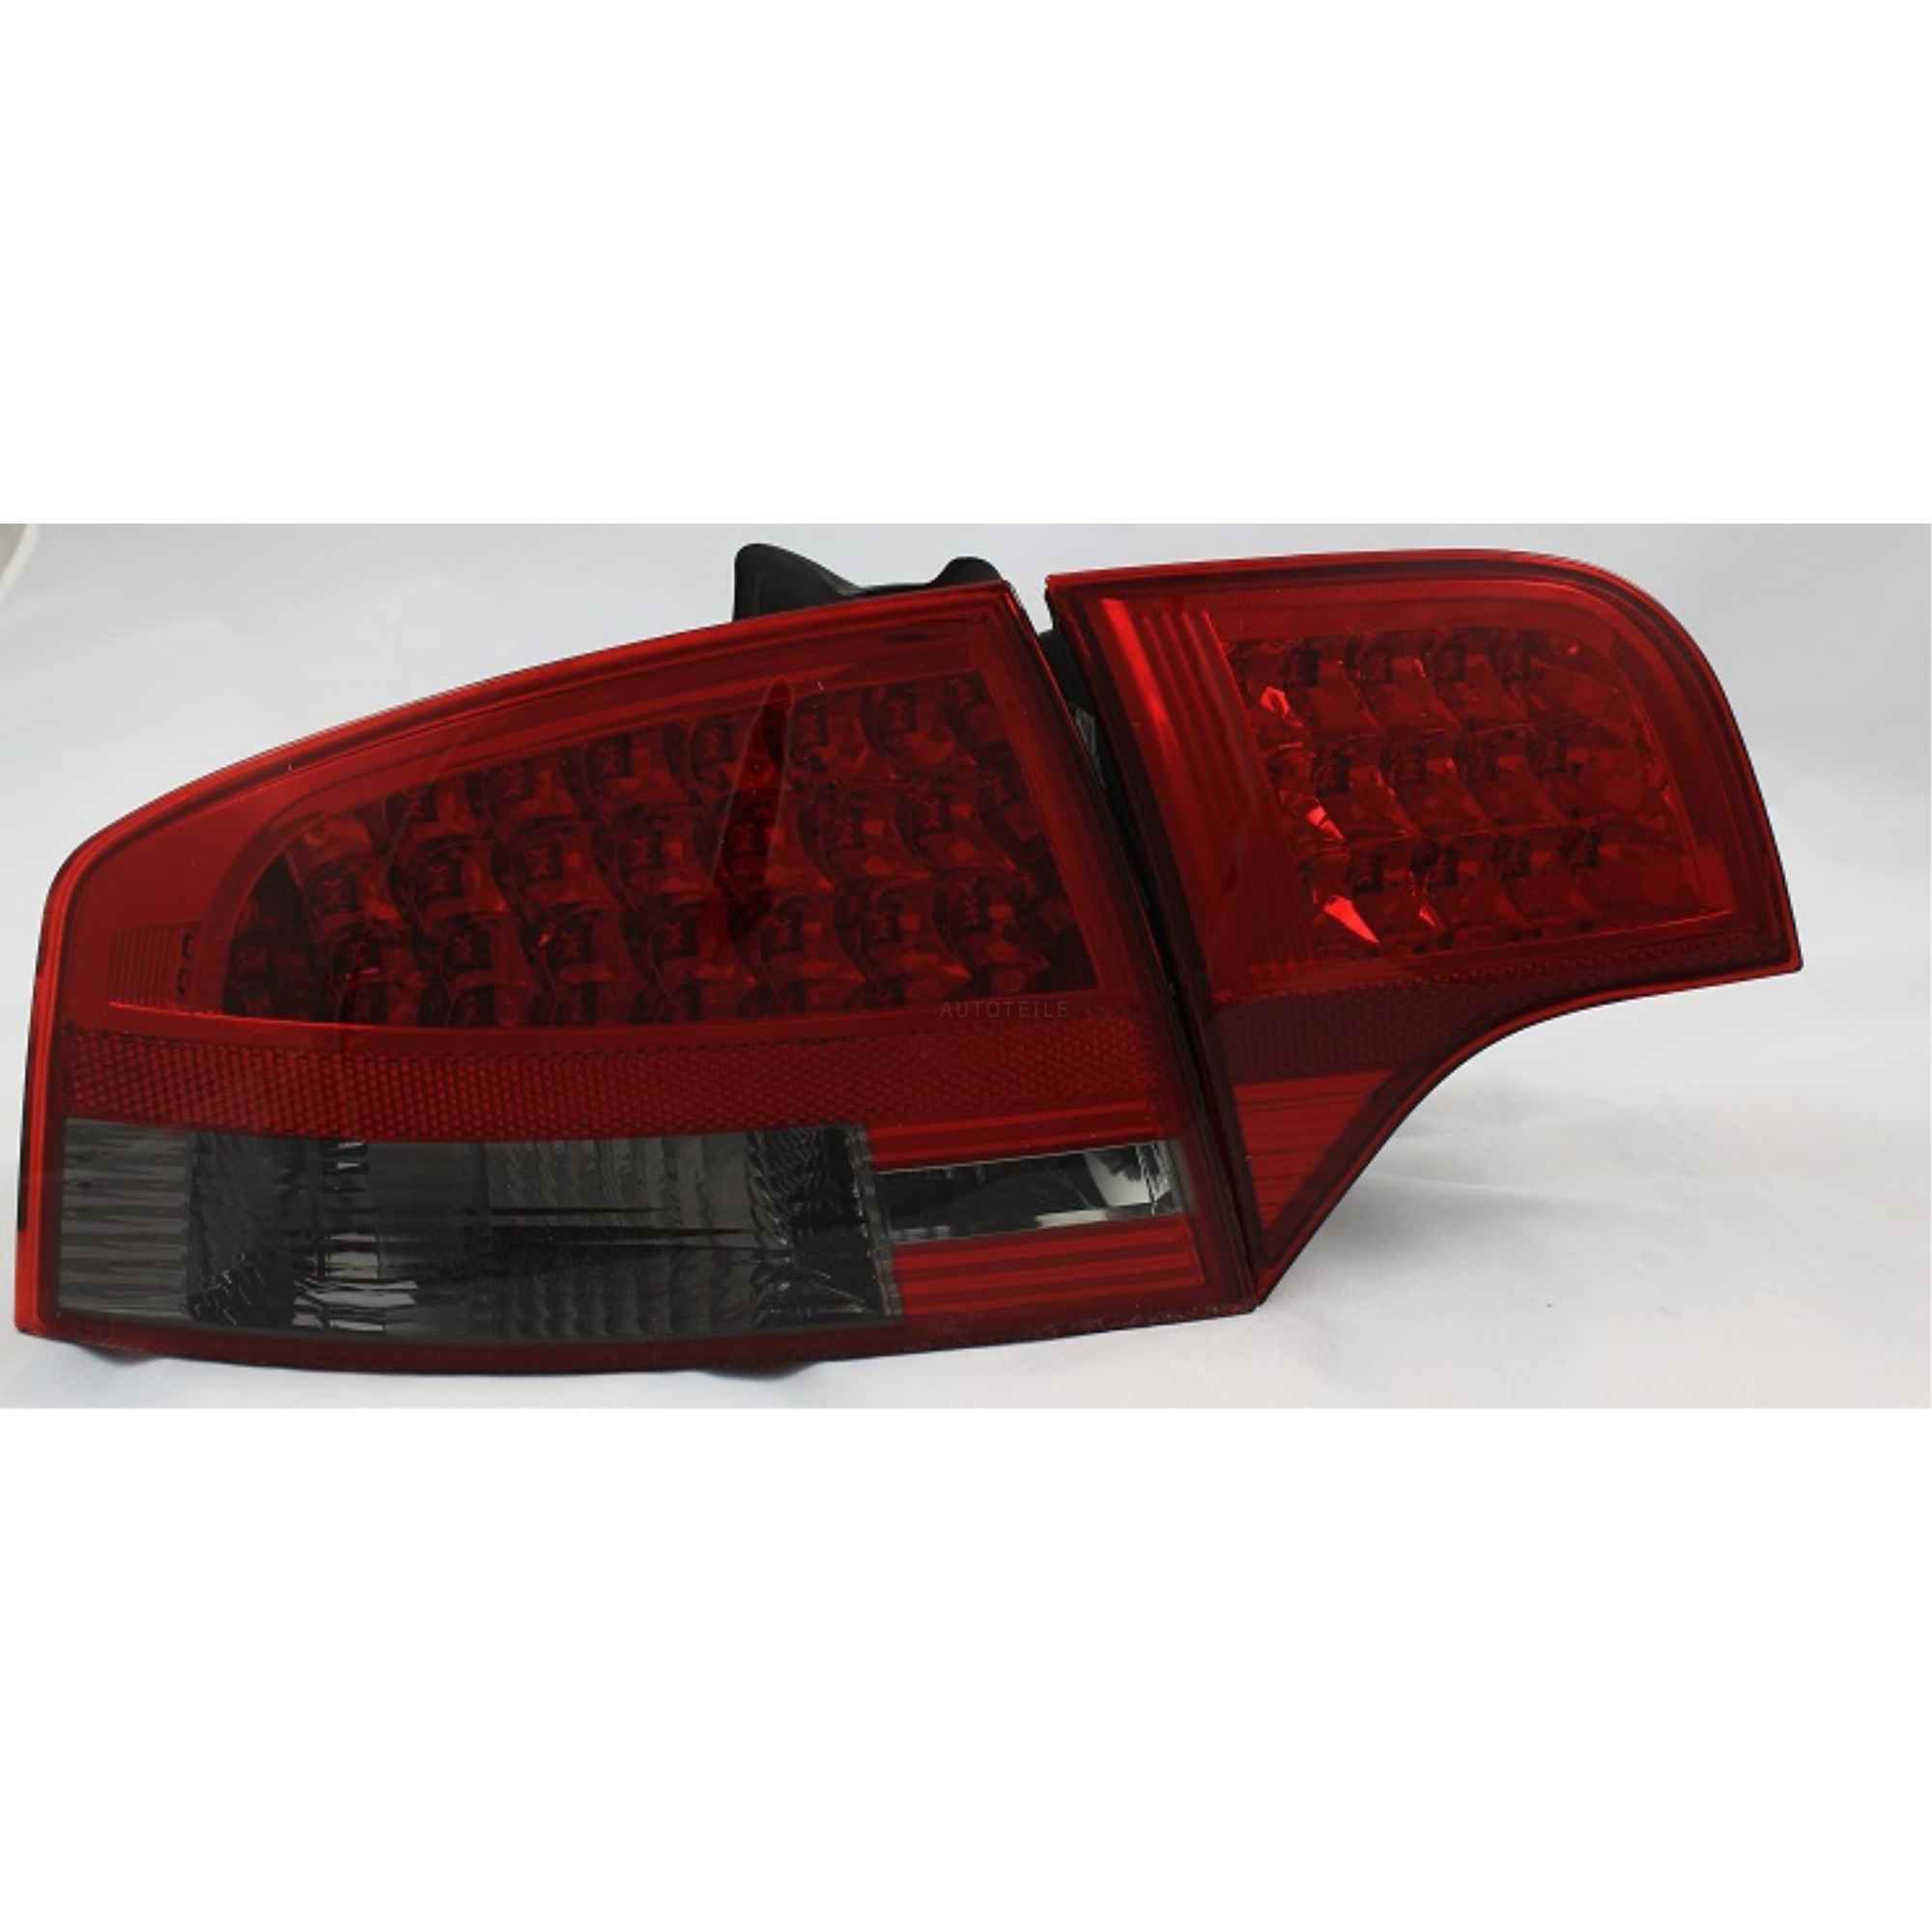 LED Rück Heckleuchten für Audi A4 B7 Limousine Bj. 04-08 klar rot smoke schwarz 